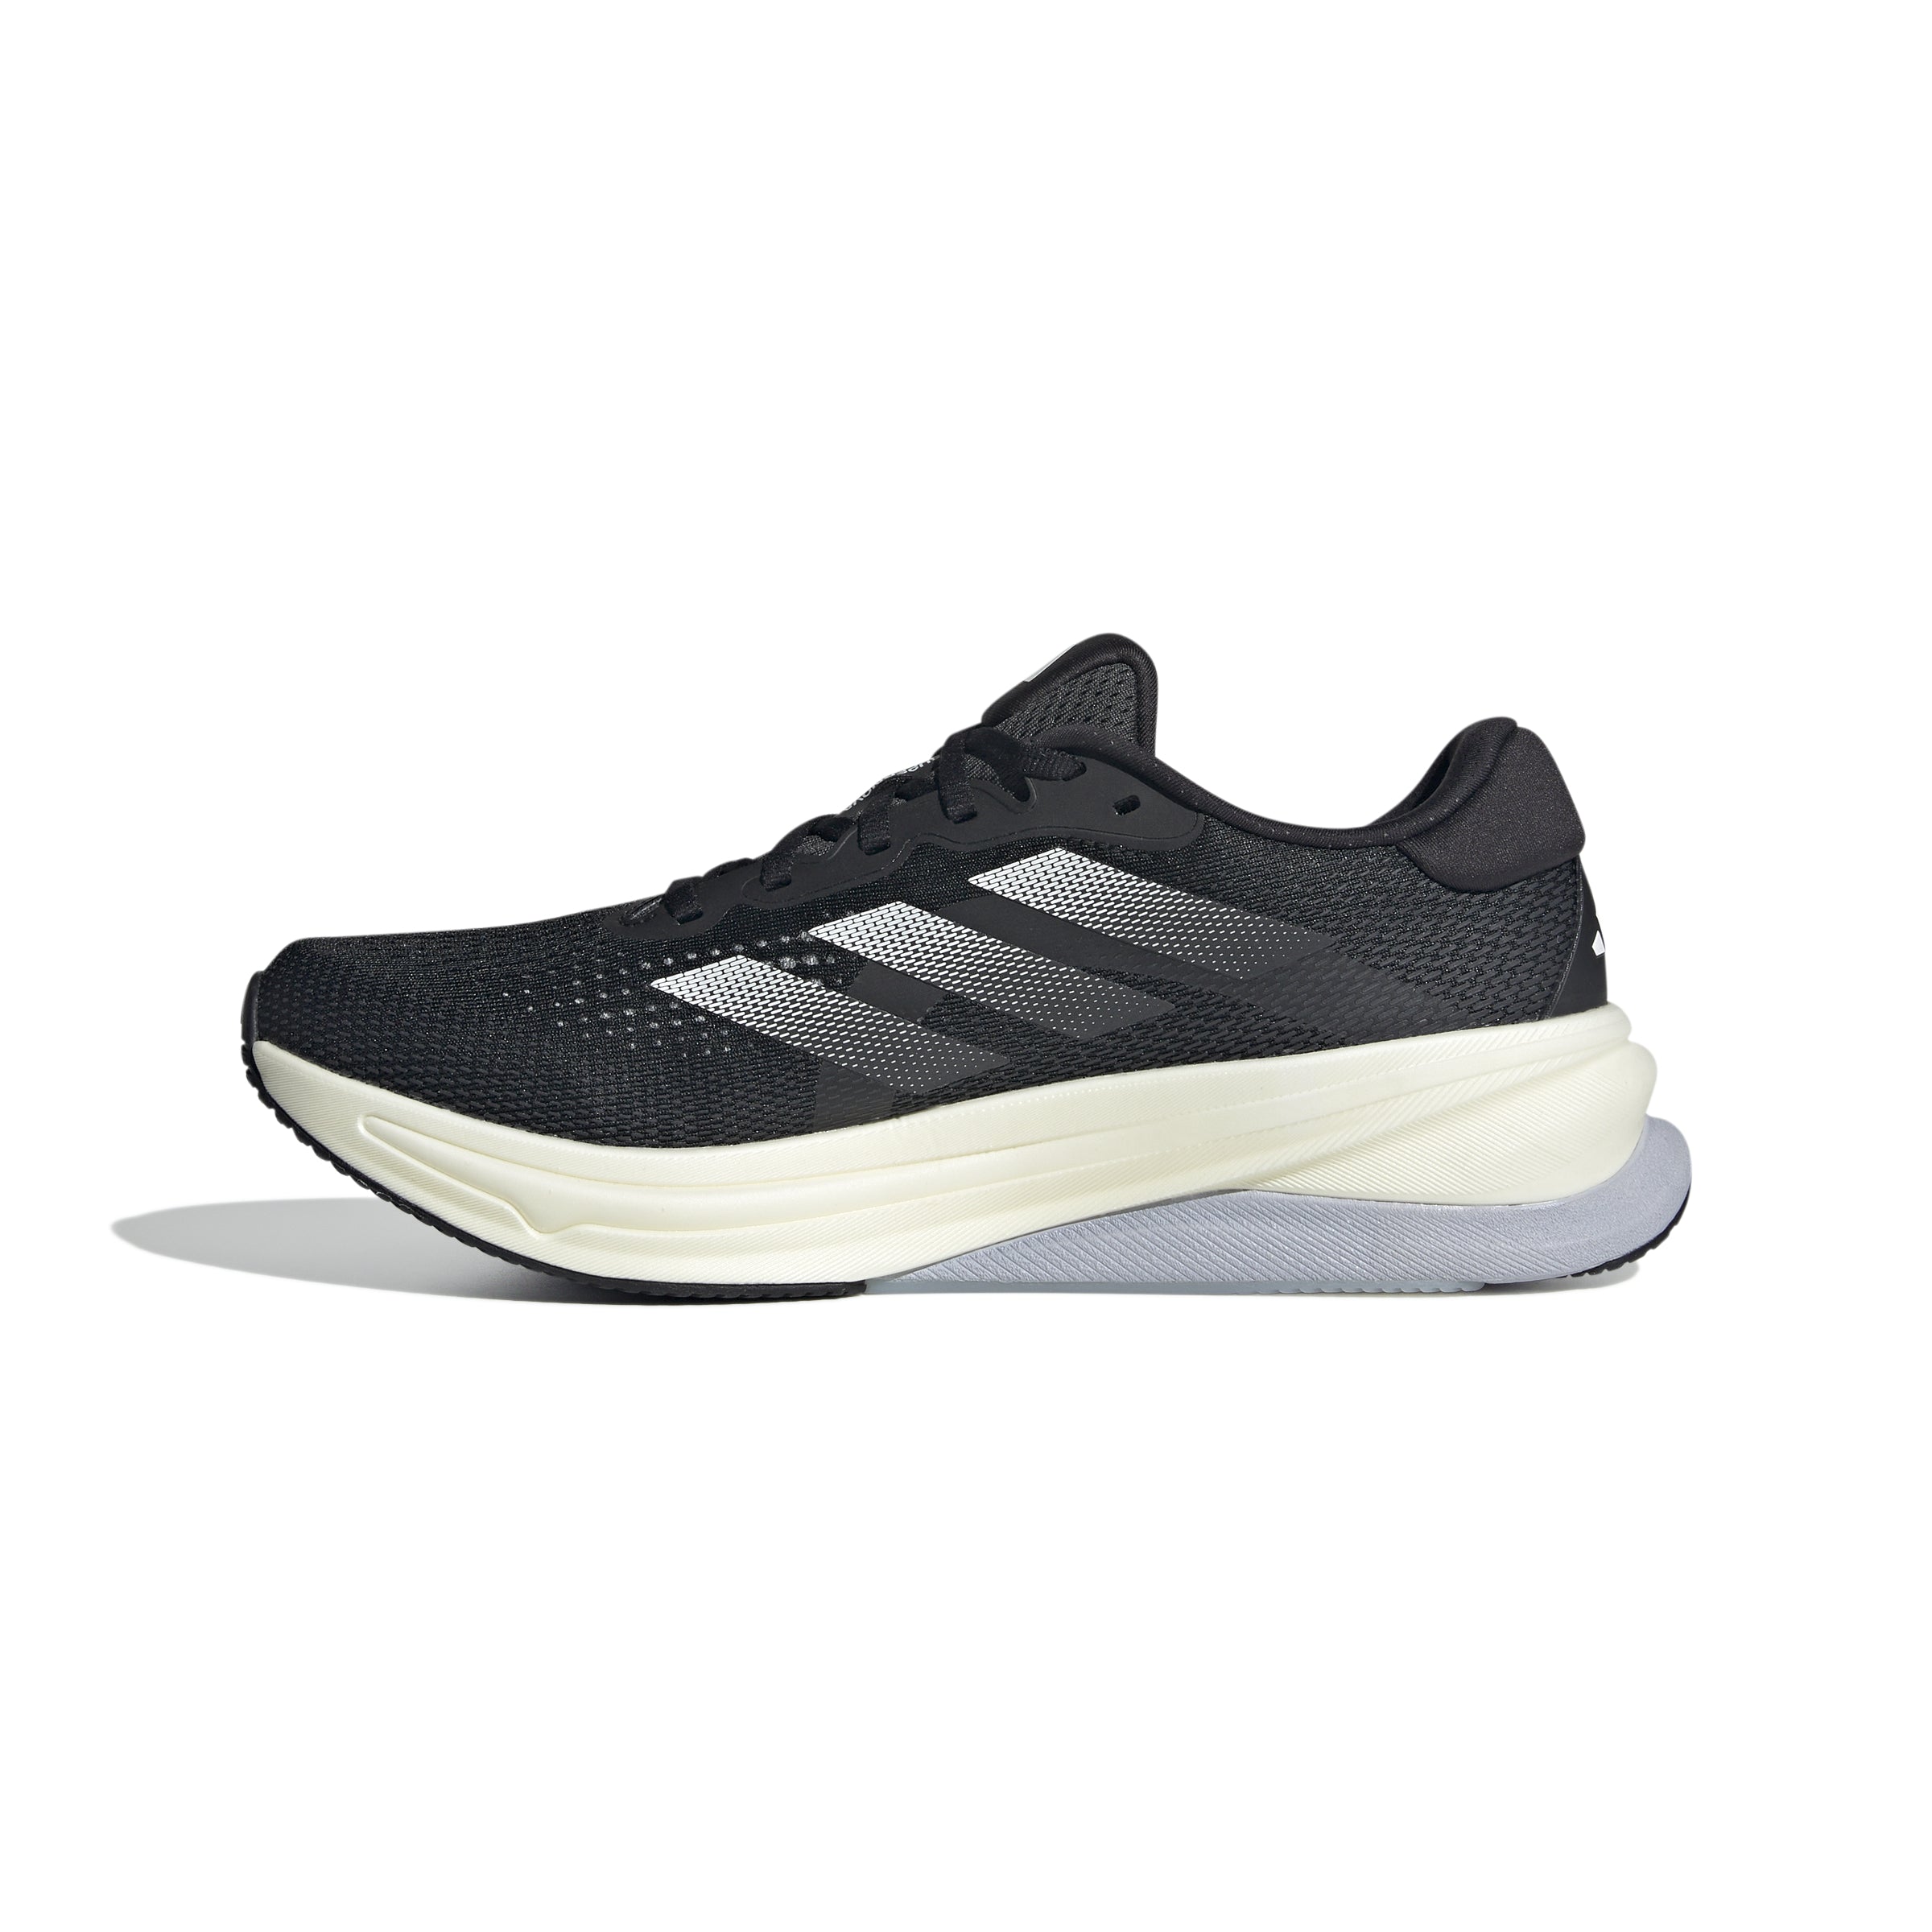 Adidas Equipment Running Support Black White Mens Running Sneakers S81484